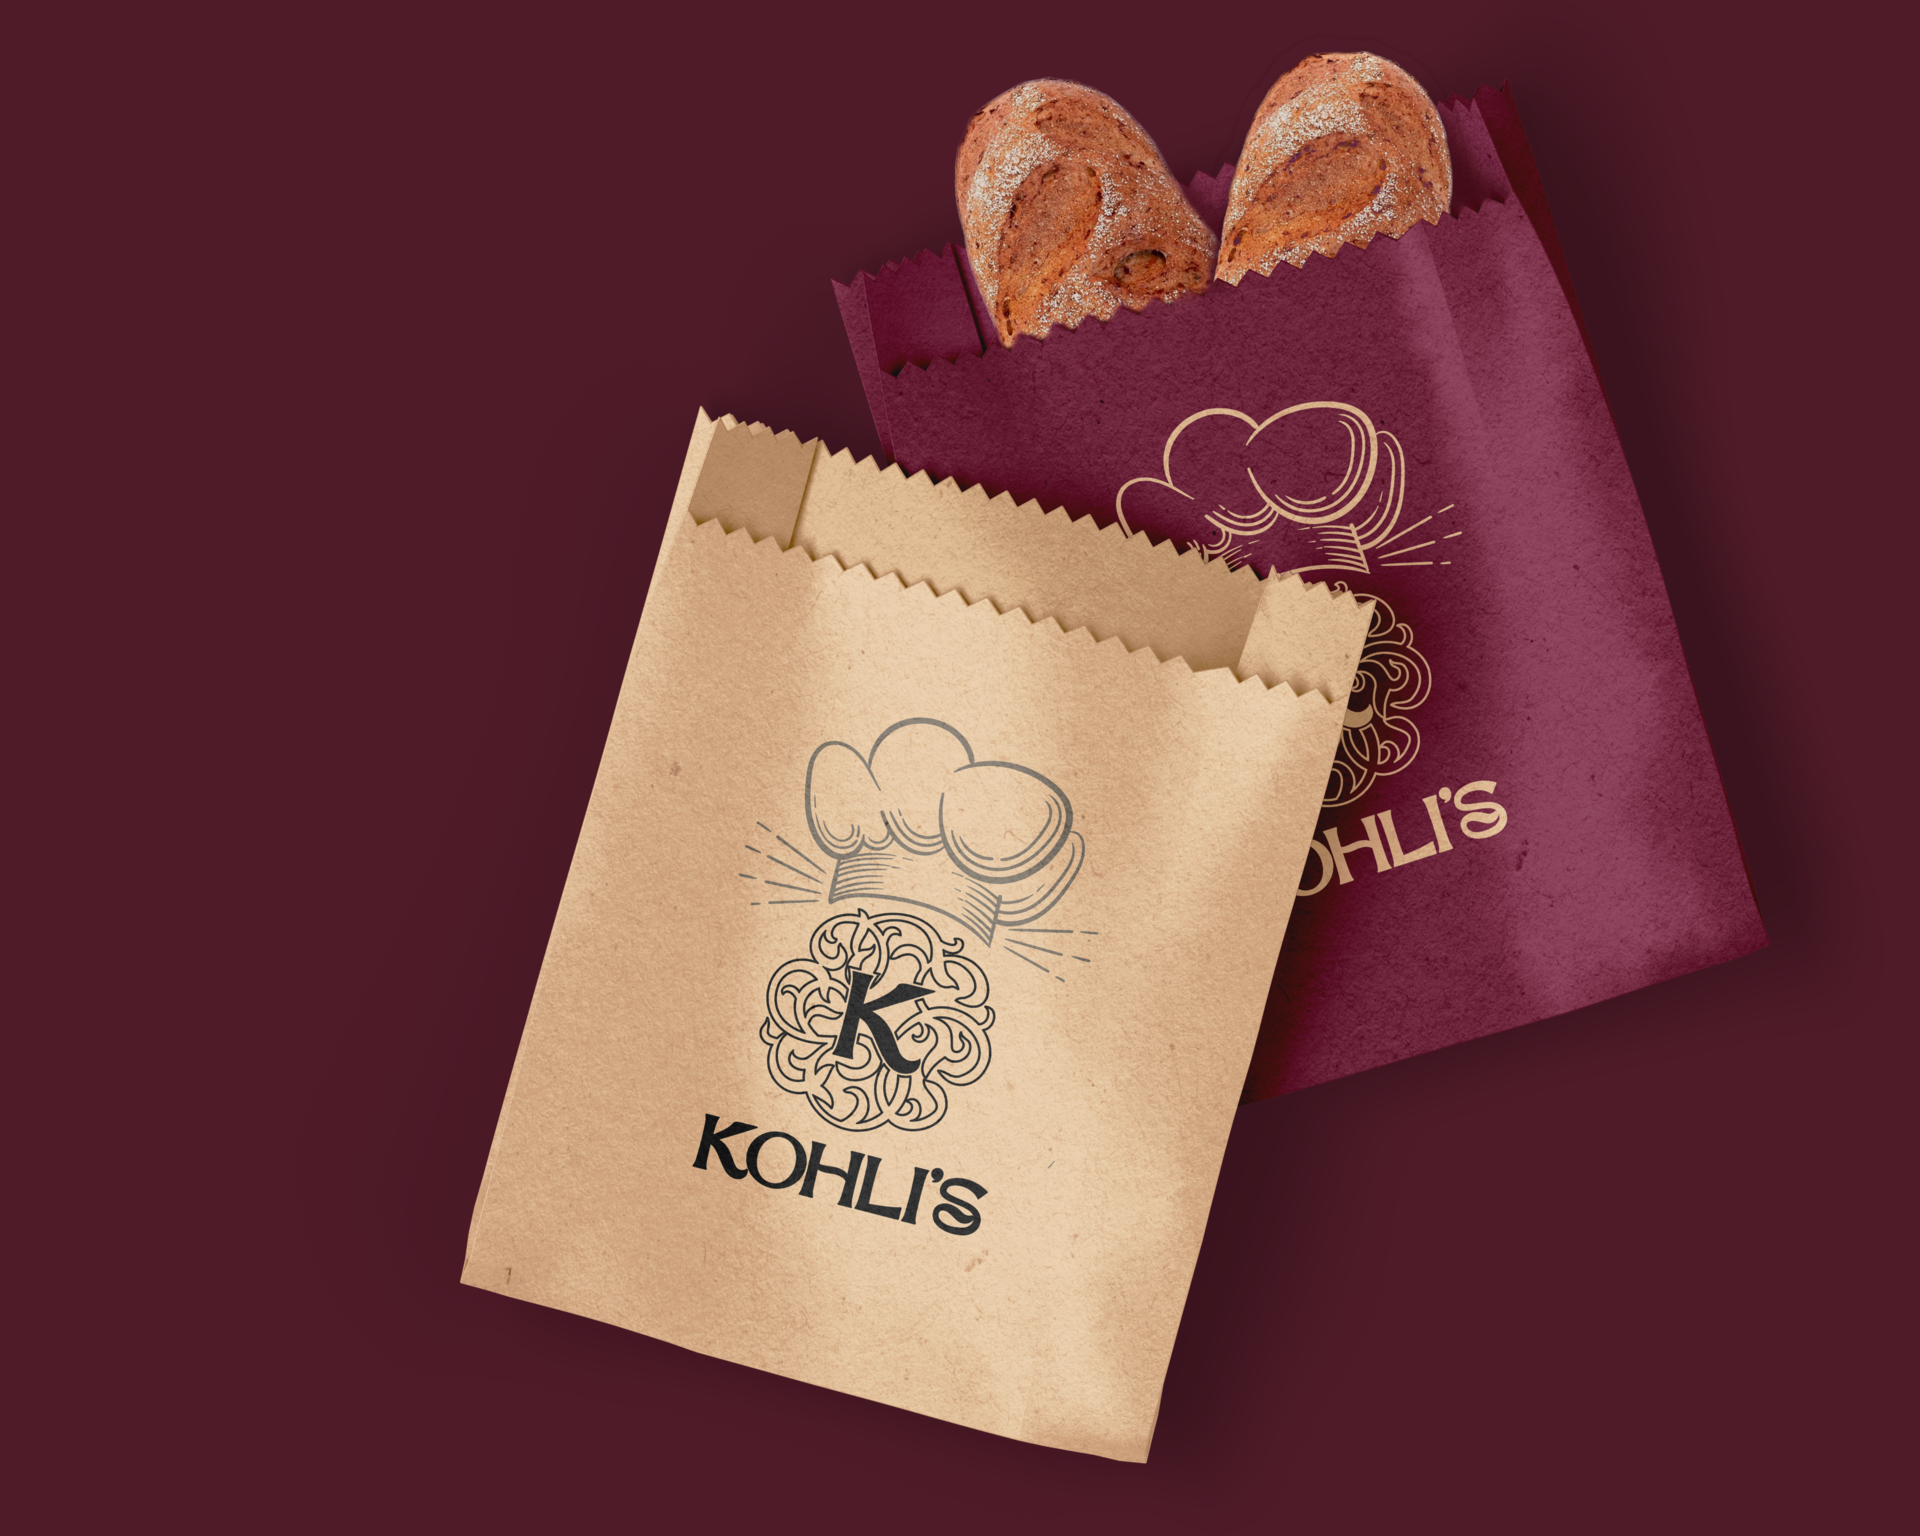 Kohli's Paper Bag Design